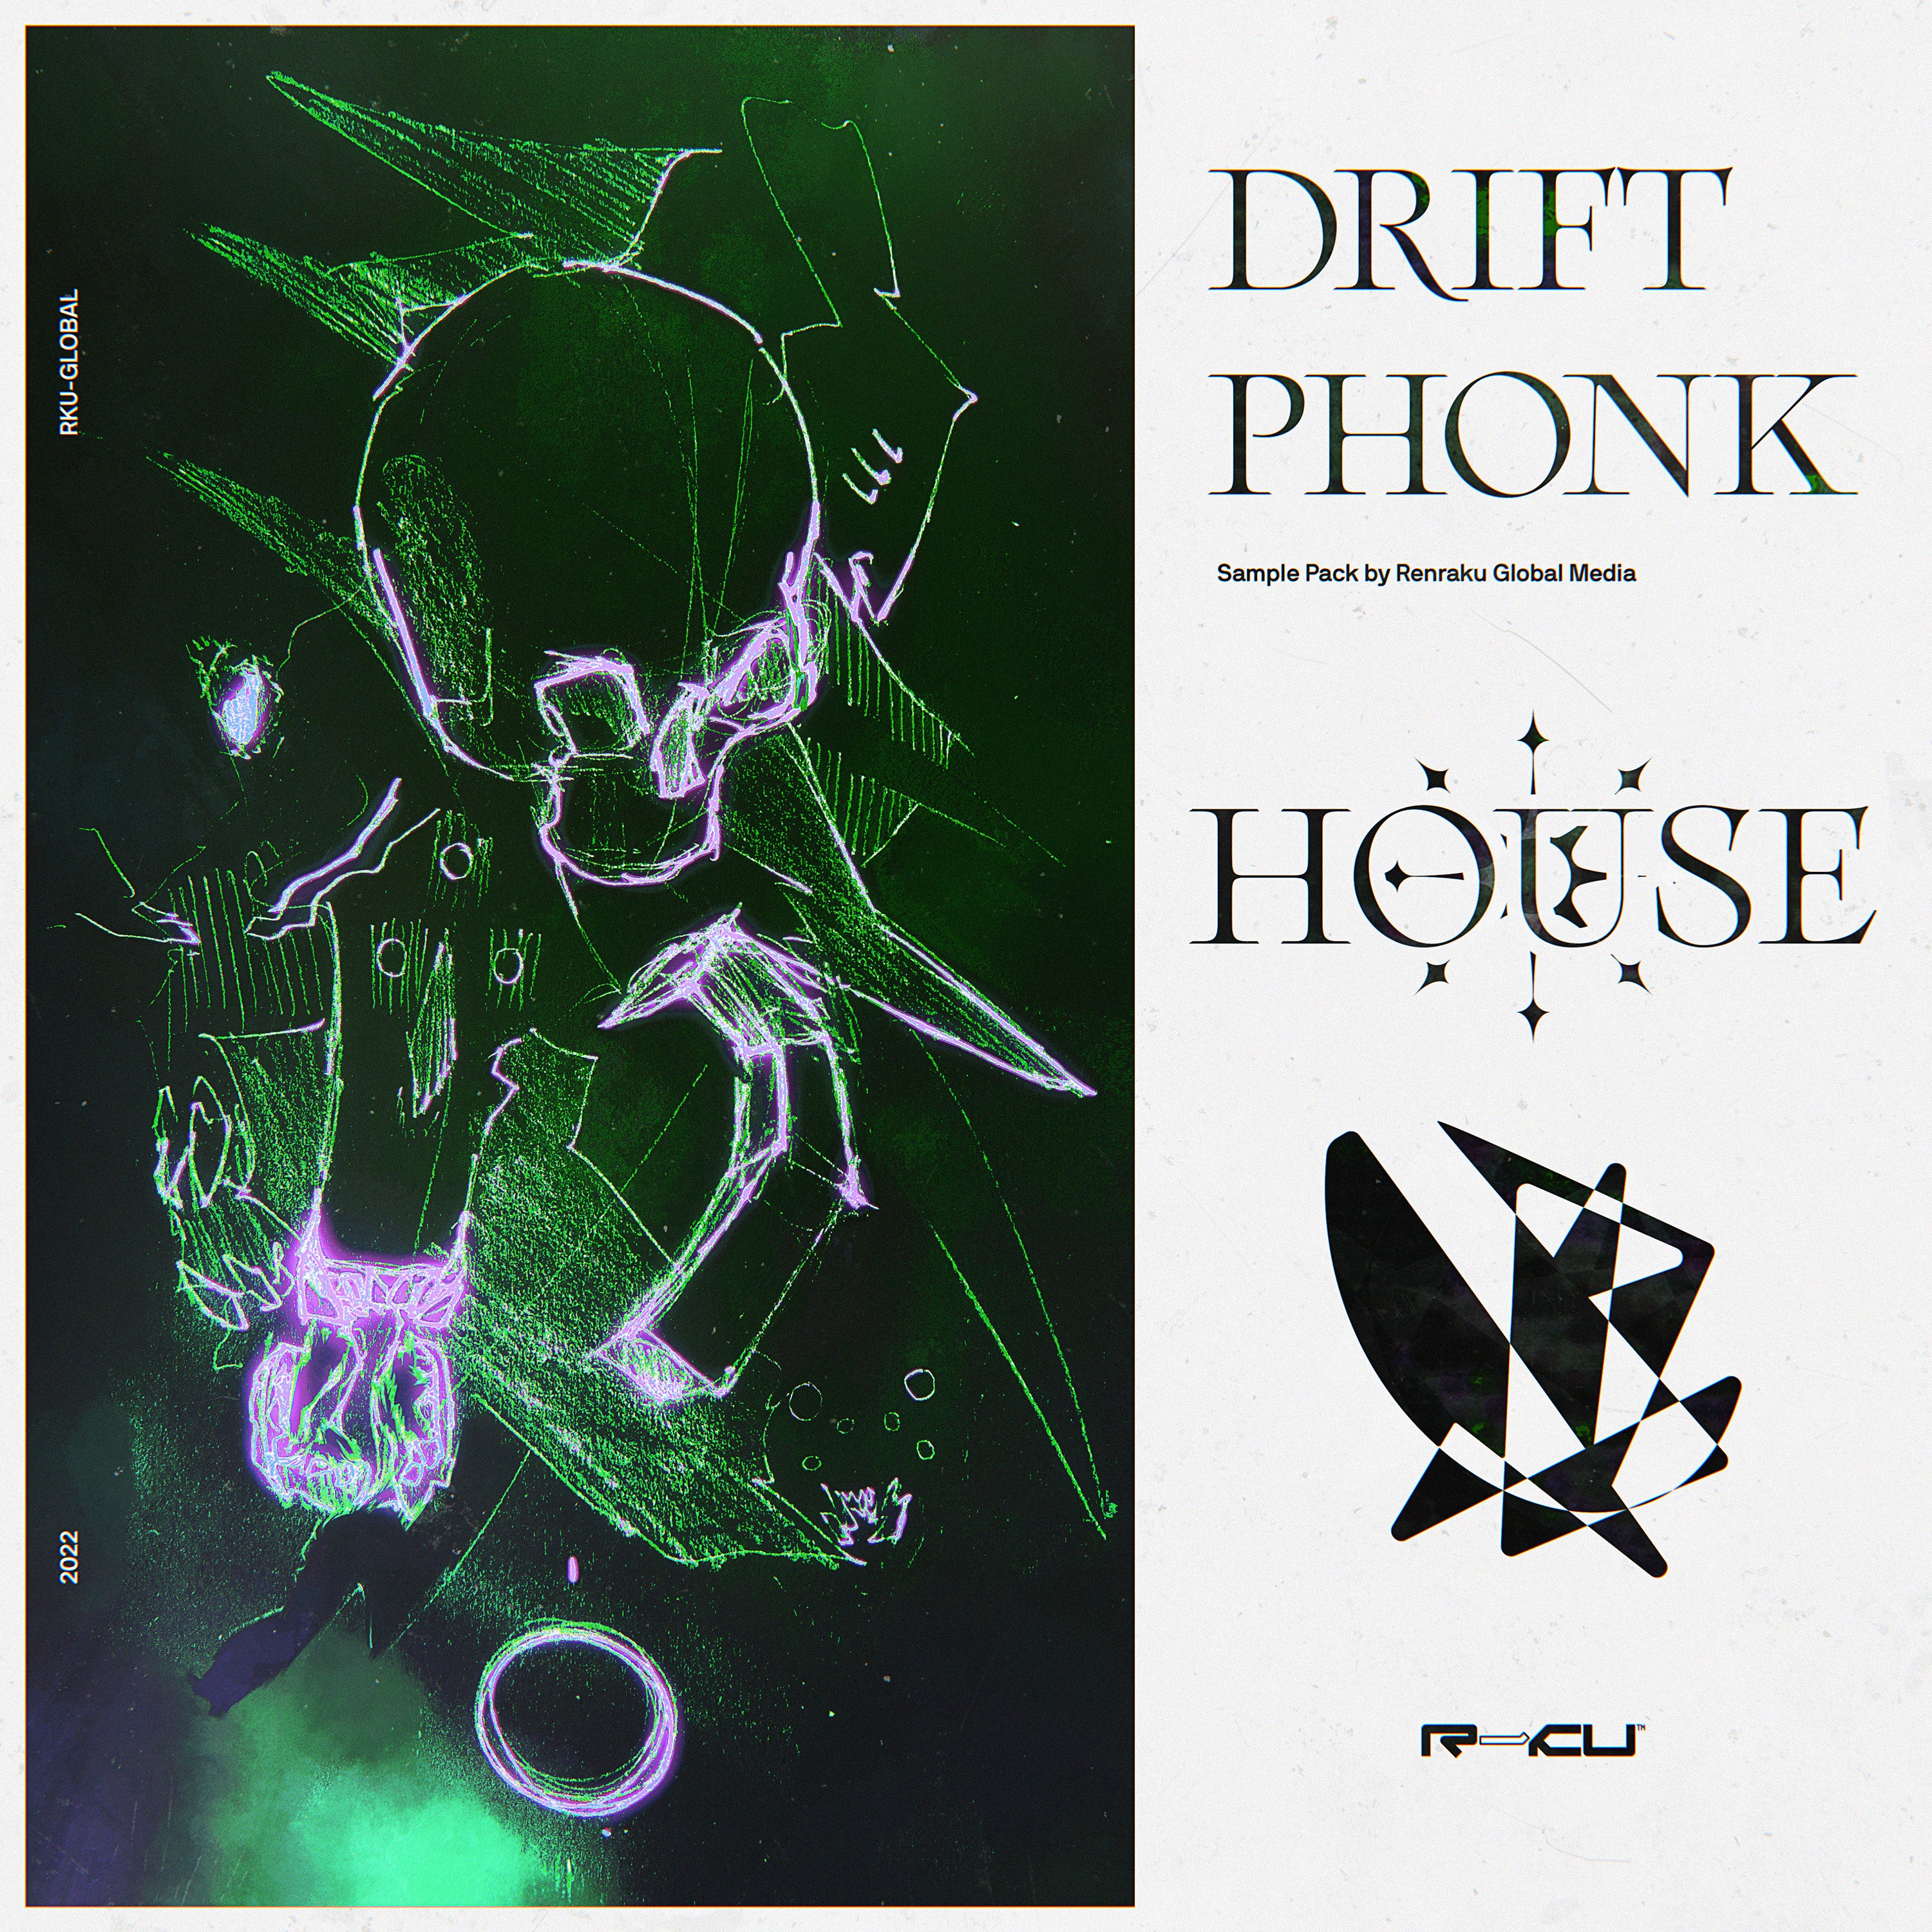 Phonk &Drift& Roblox ID 